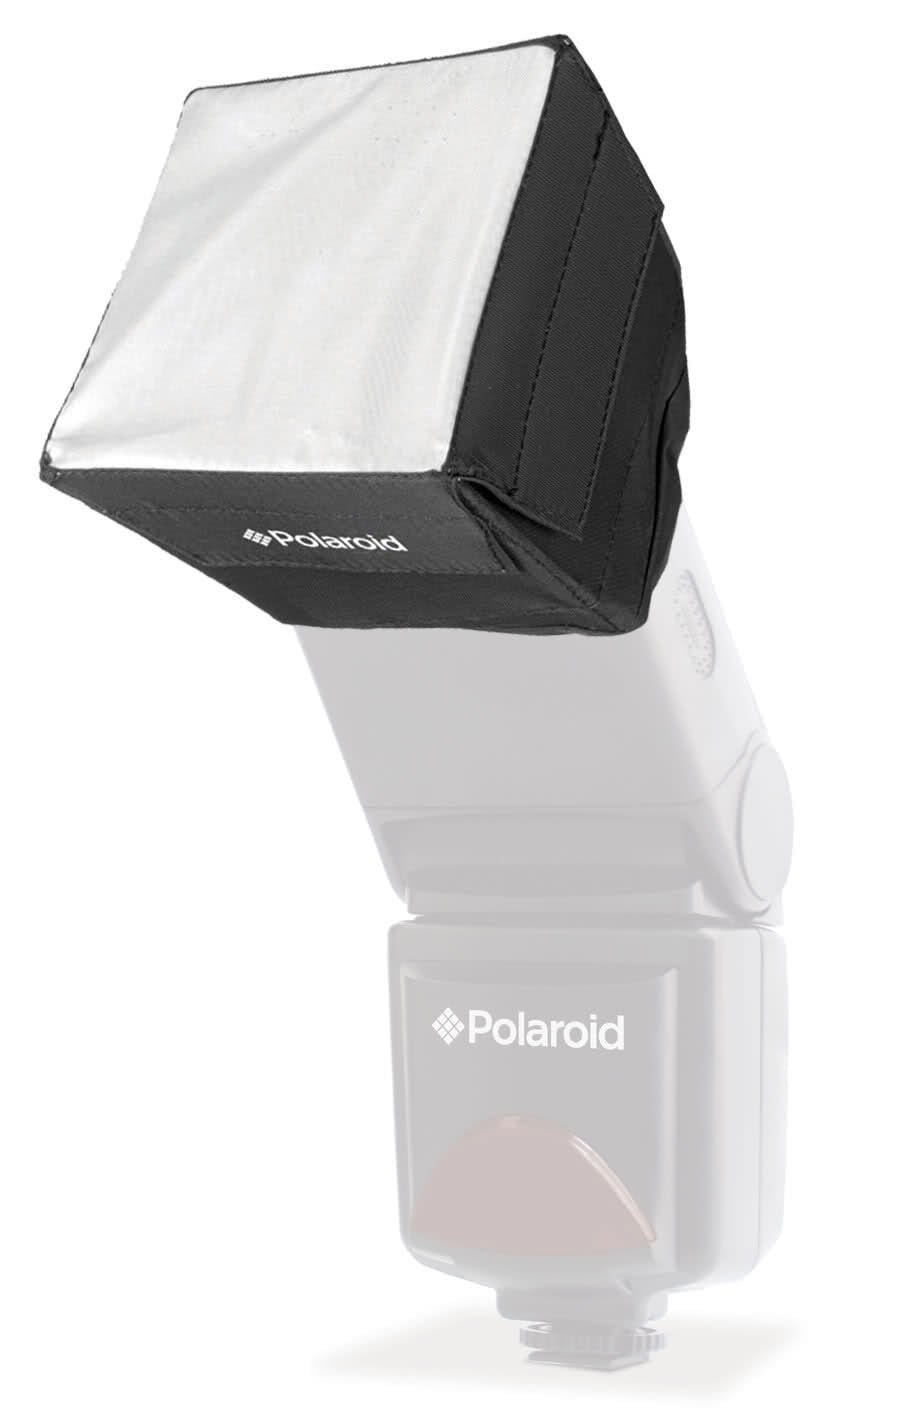 Polaroid Flash Diffuser Polaroid Mini Studio Soft Box Flash Diffuser and Power Battery Charger Canon Speedlite 430EX III-RT Flash 